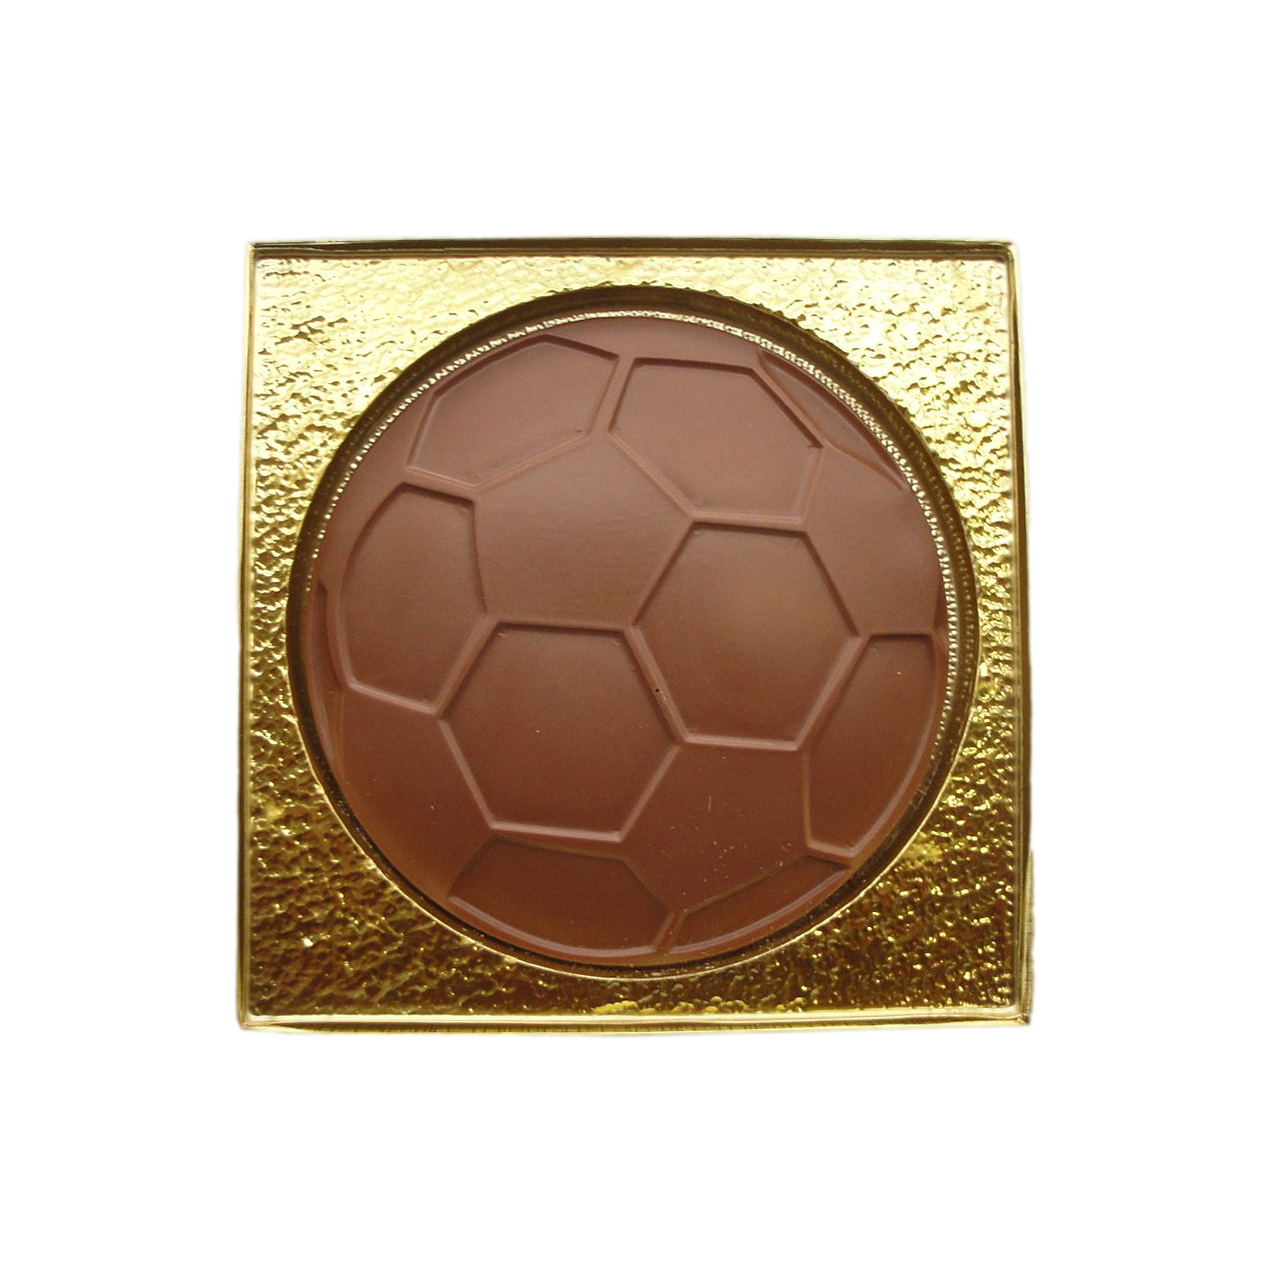 soccer ball gift box